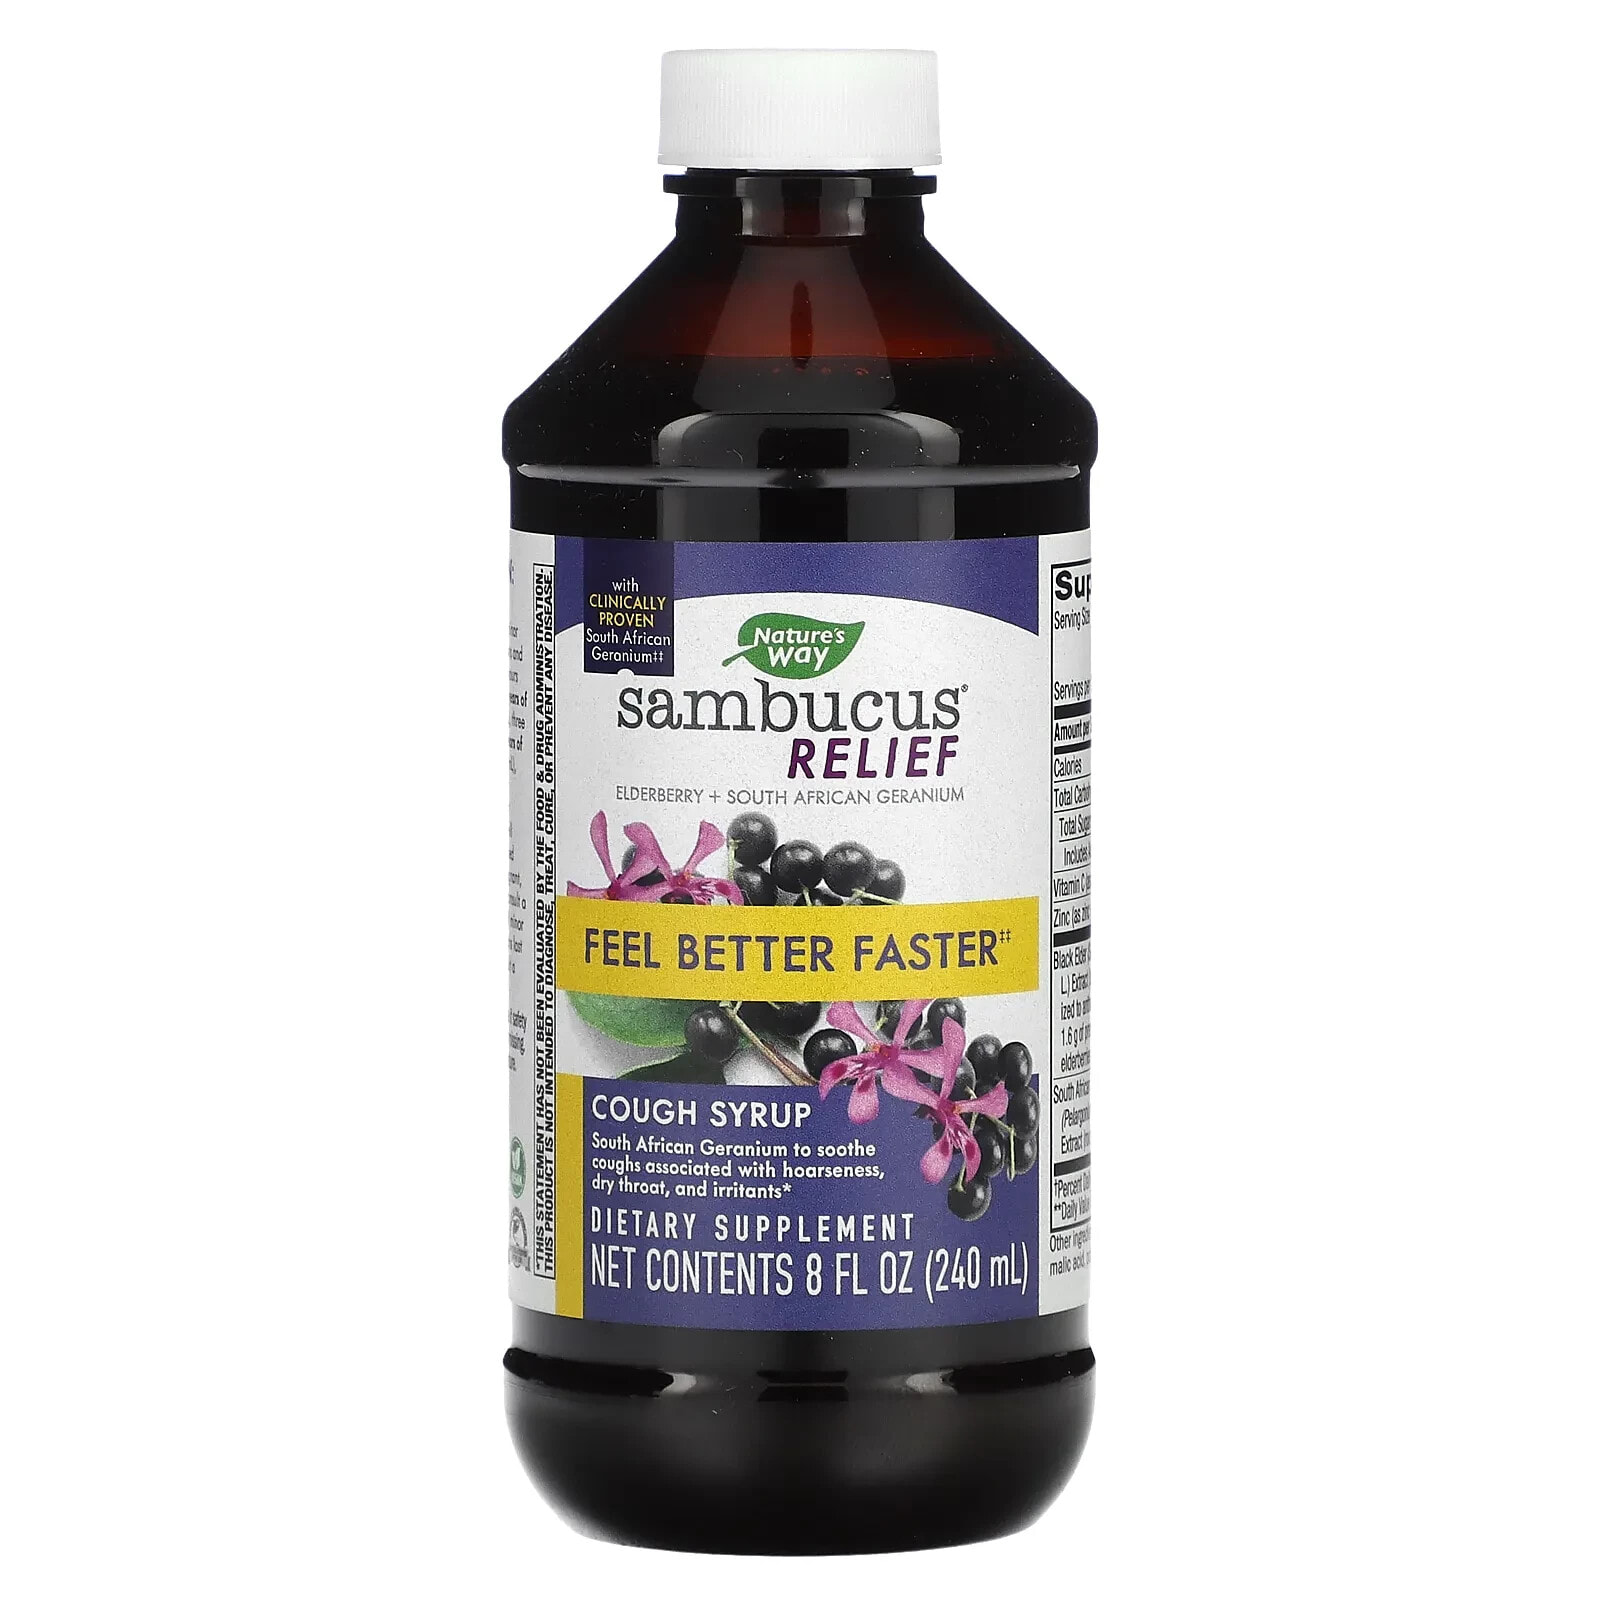 Sambucus Relief, Cough Syrup, 8 fl oz (240 ml)